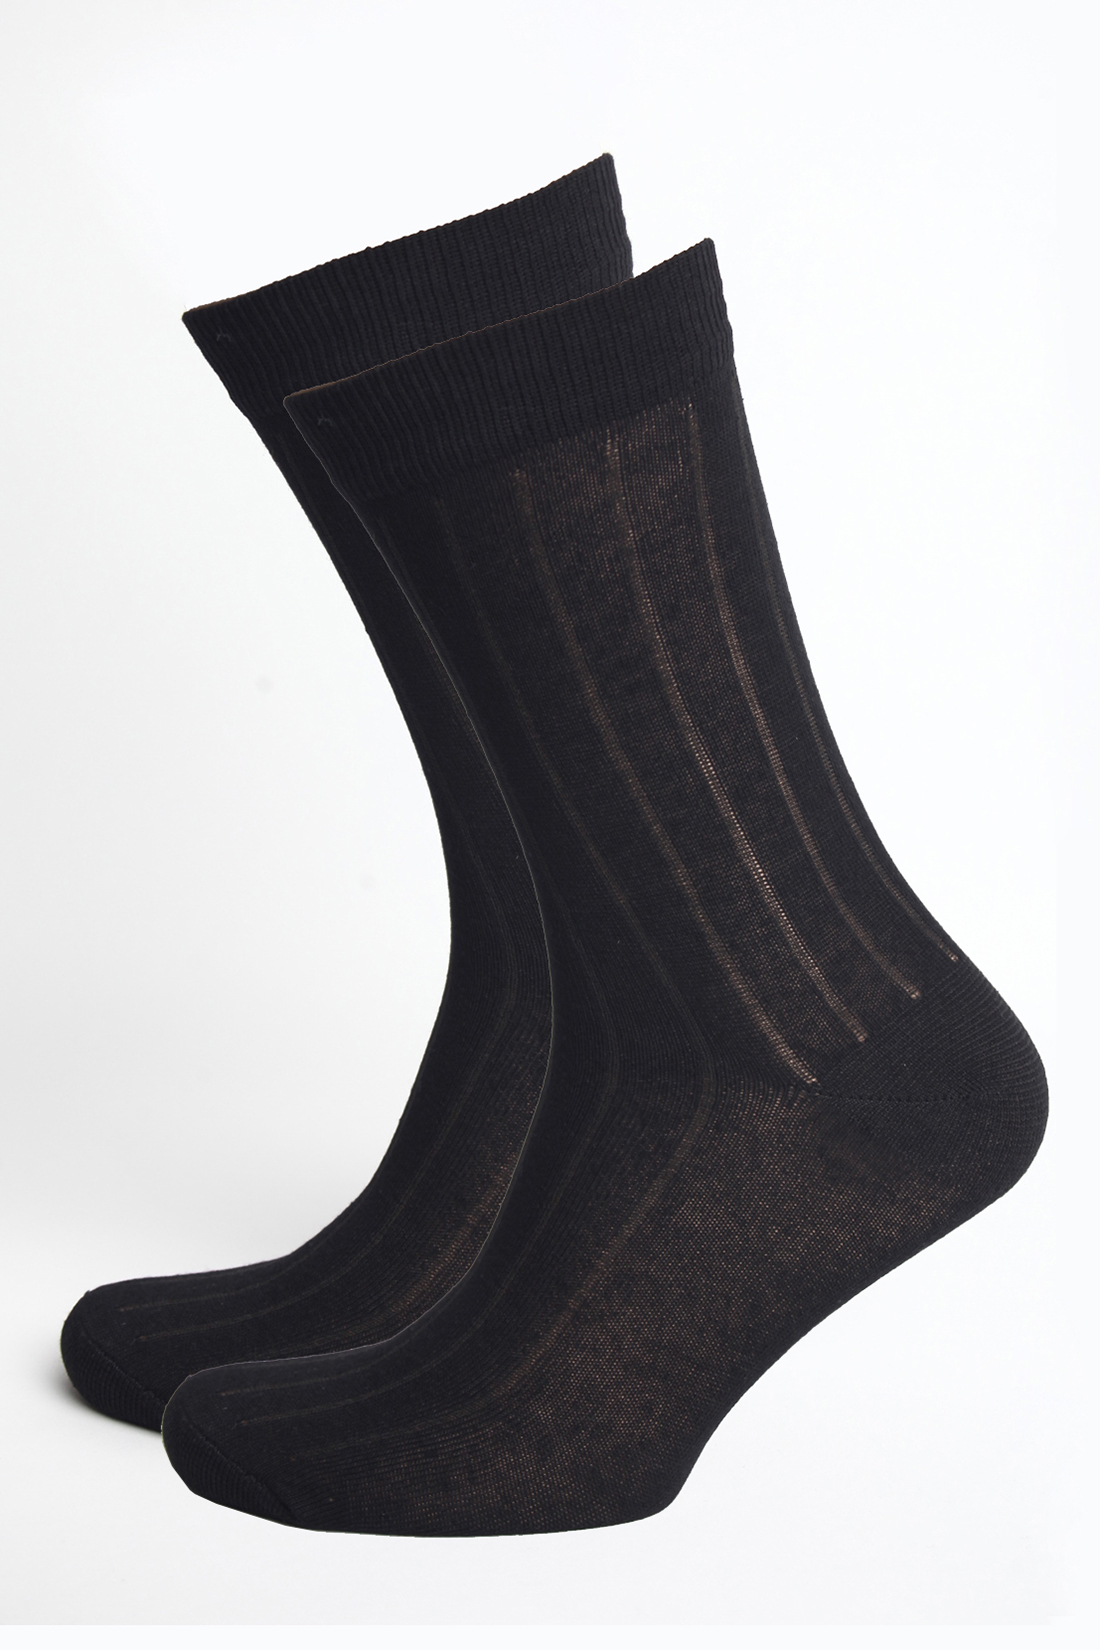 Мужские носки, 2 пары (арт. baon B891110), размер 40/42, цвет черный Мужские носки, 2 пары (арт. baon B891110) - фото 1